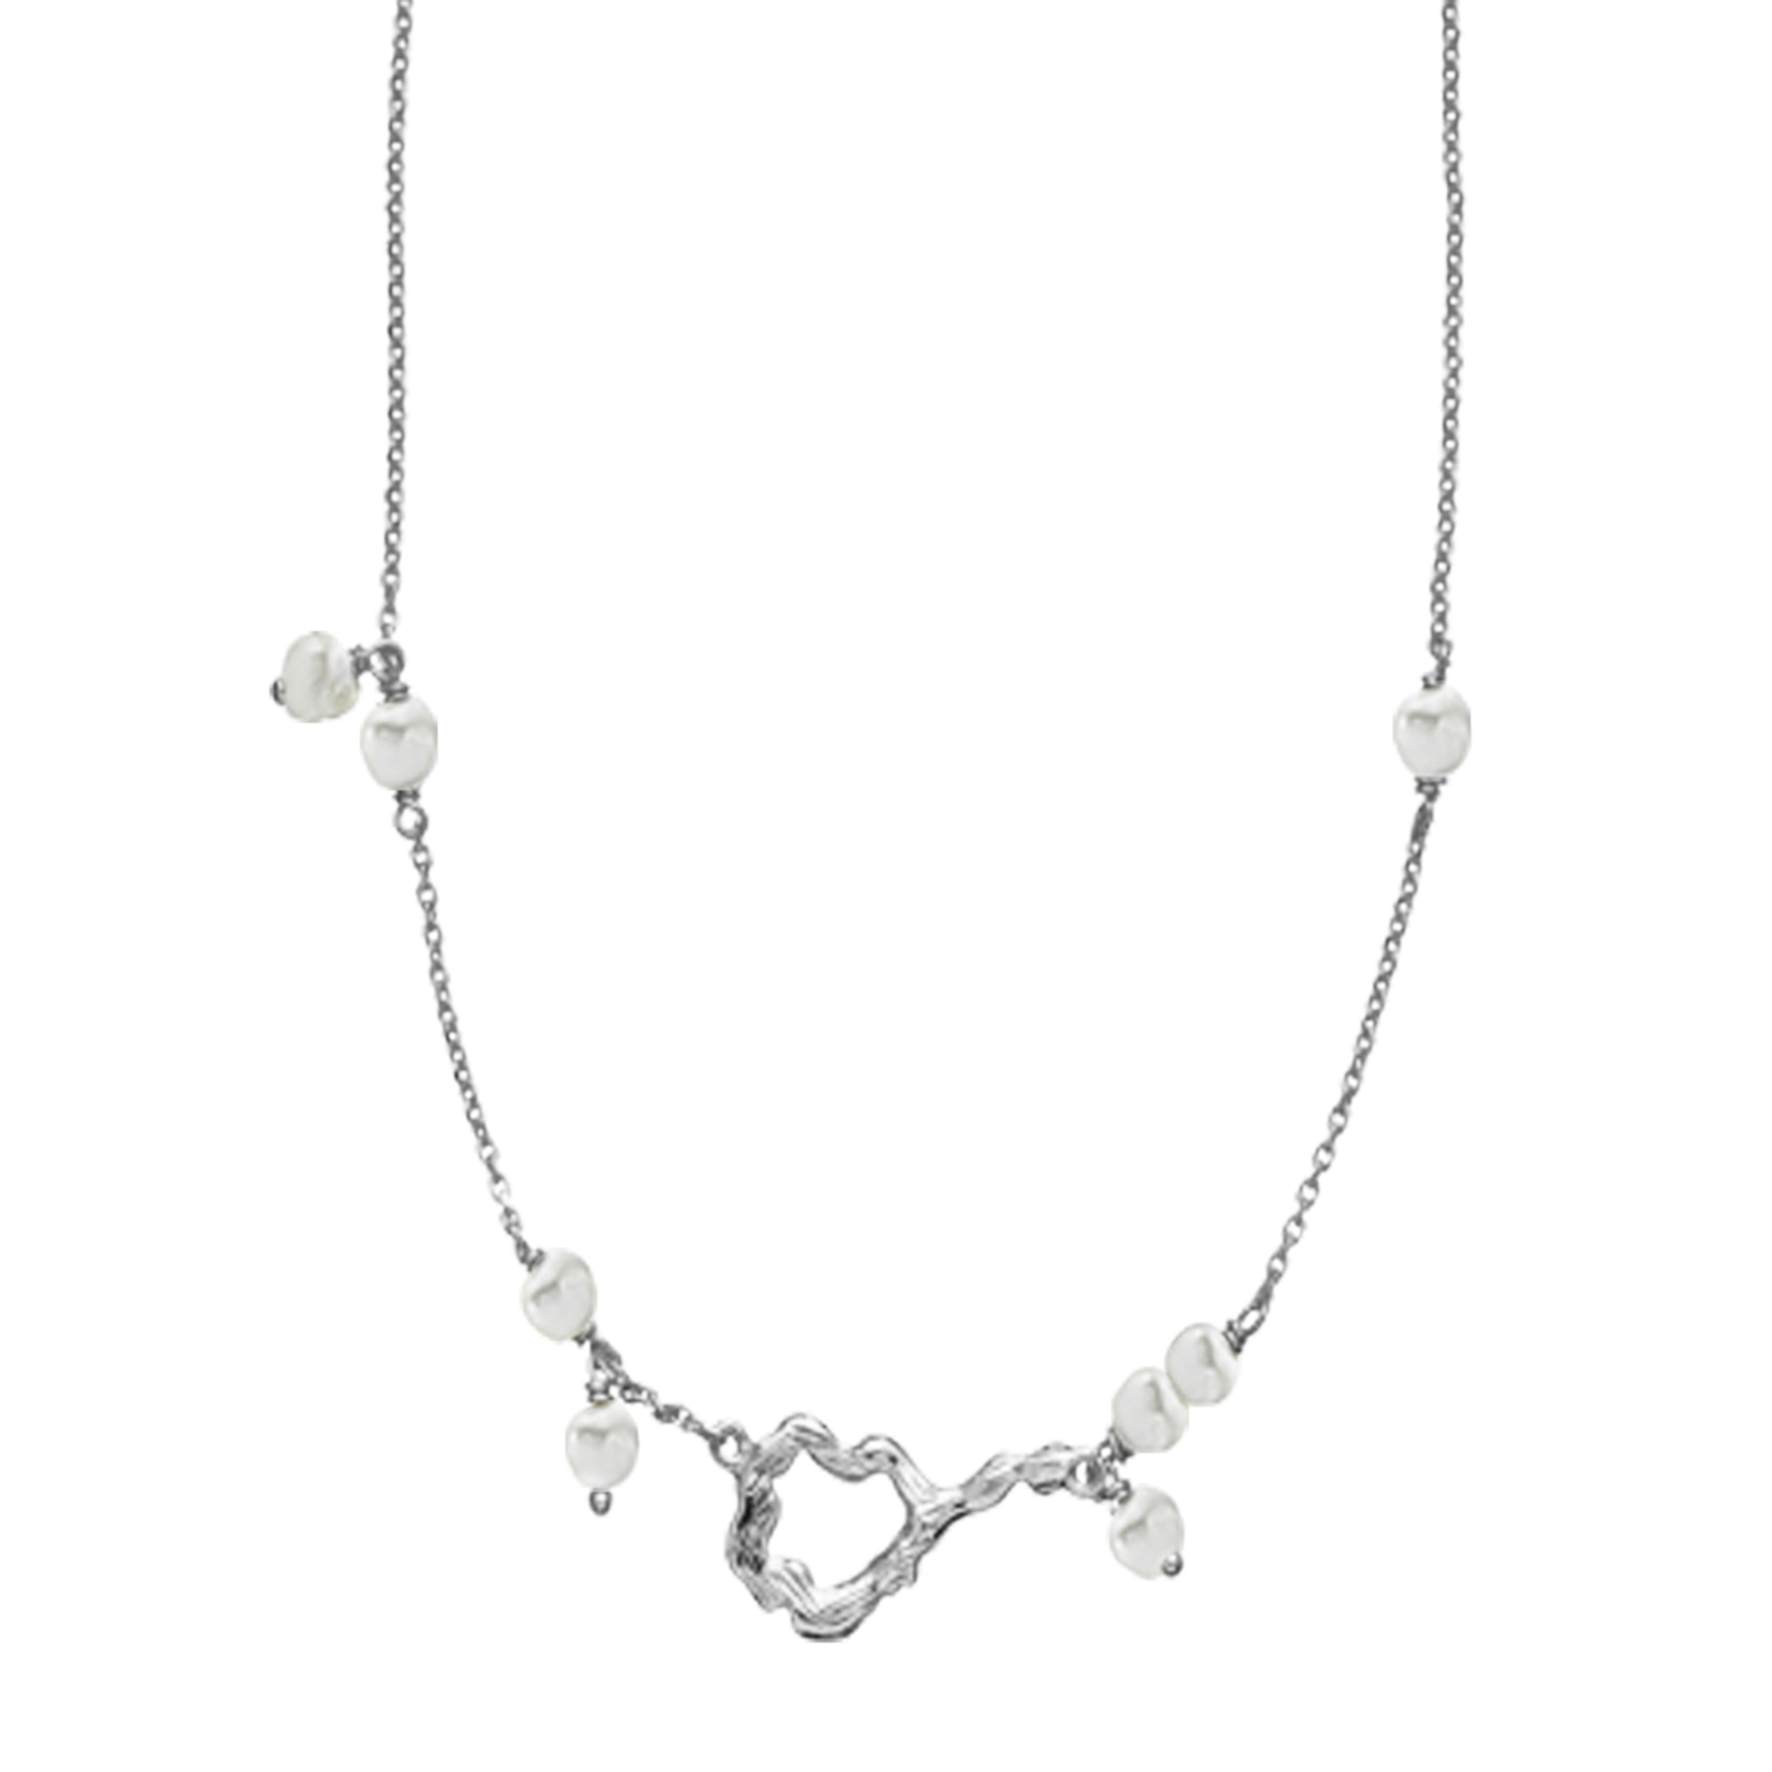 Lærke Bentsen By Sistie Necklace With Pearls från Sistie i Silver Sterling 925|Freshwater Pearl